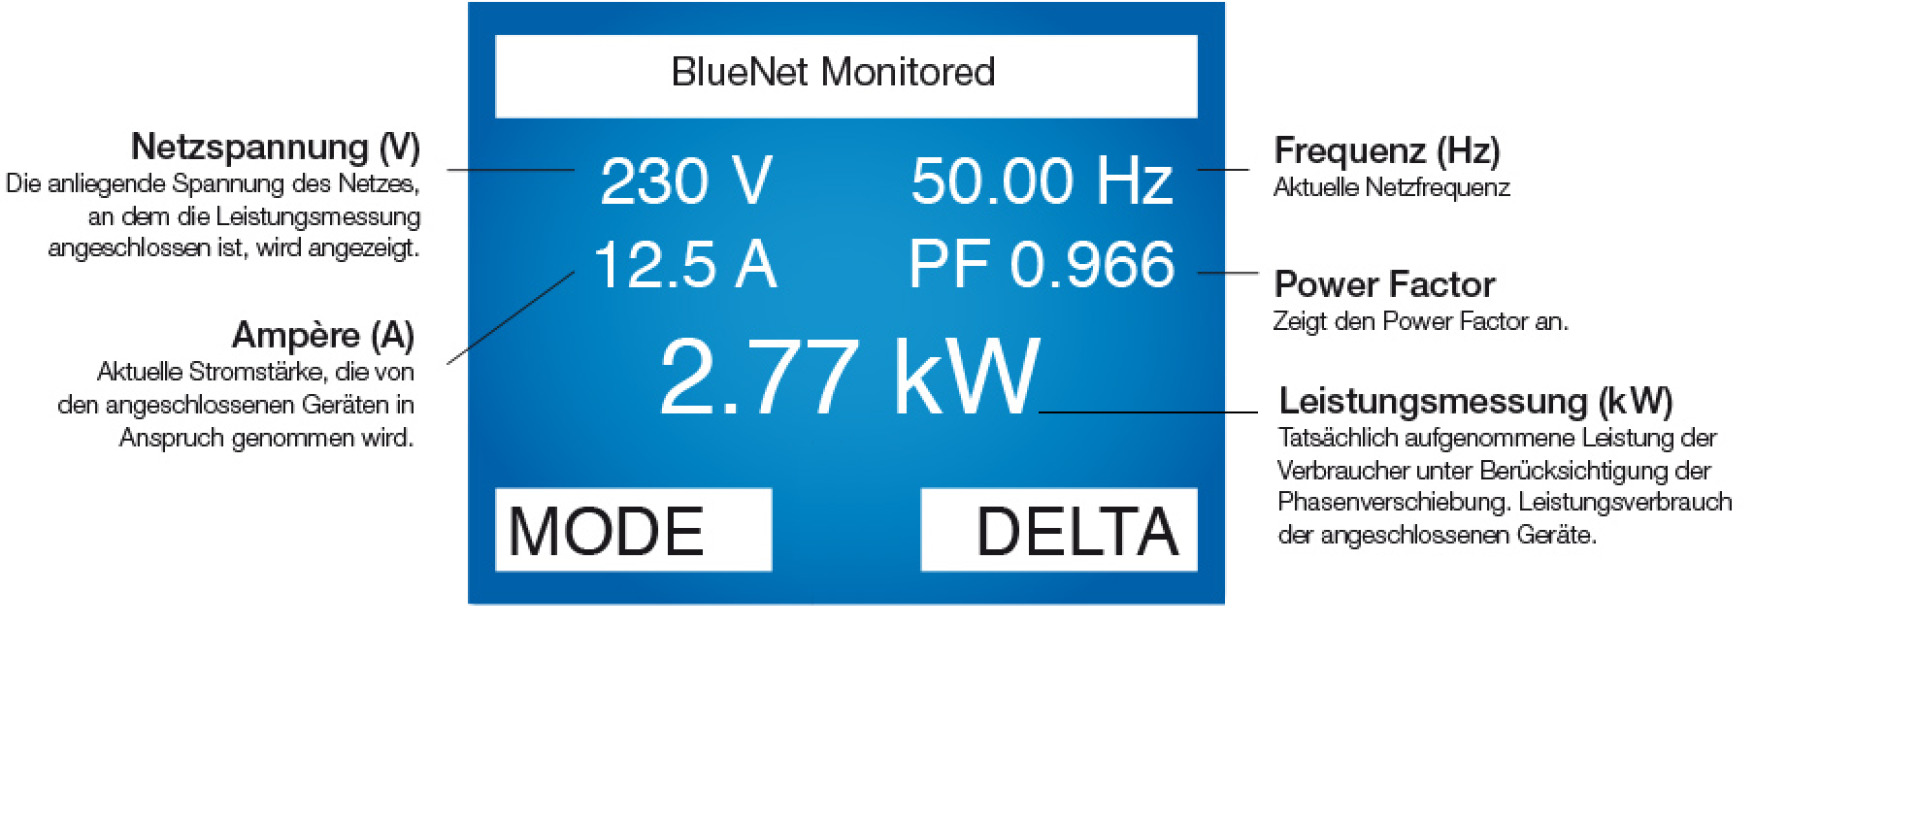 19" 1U PDU BN2000 Monitored 6 x CEE 7/5 Outlet